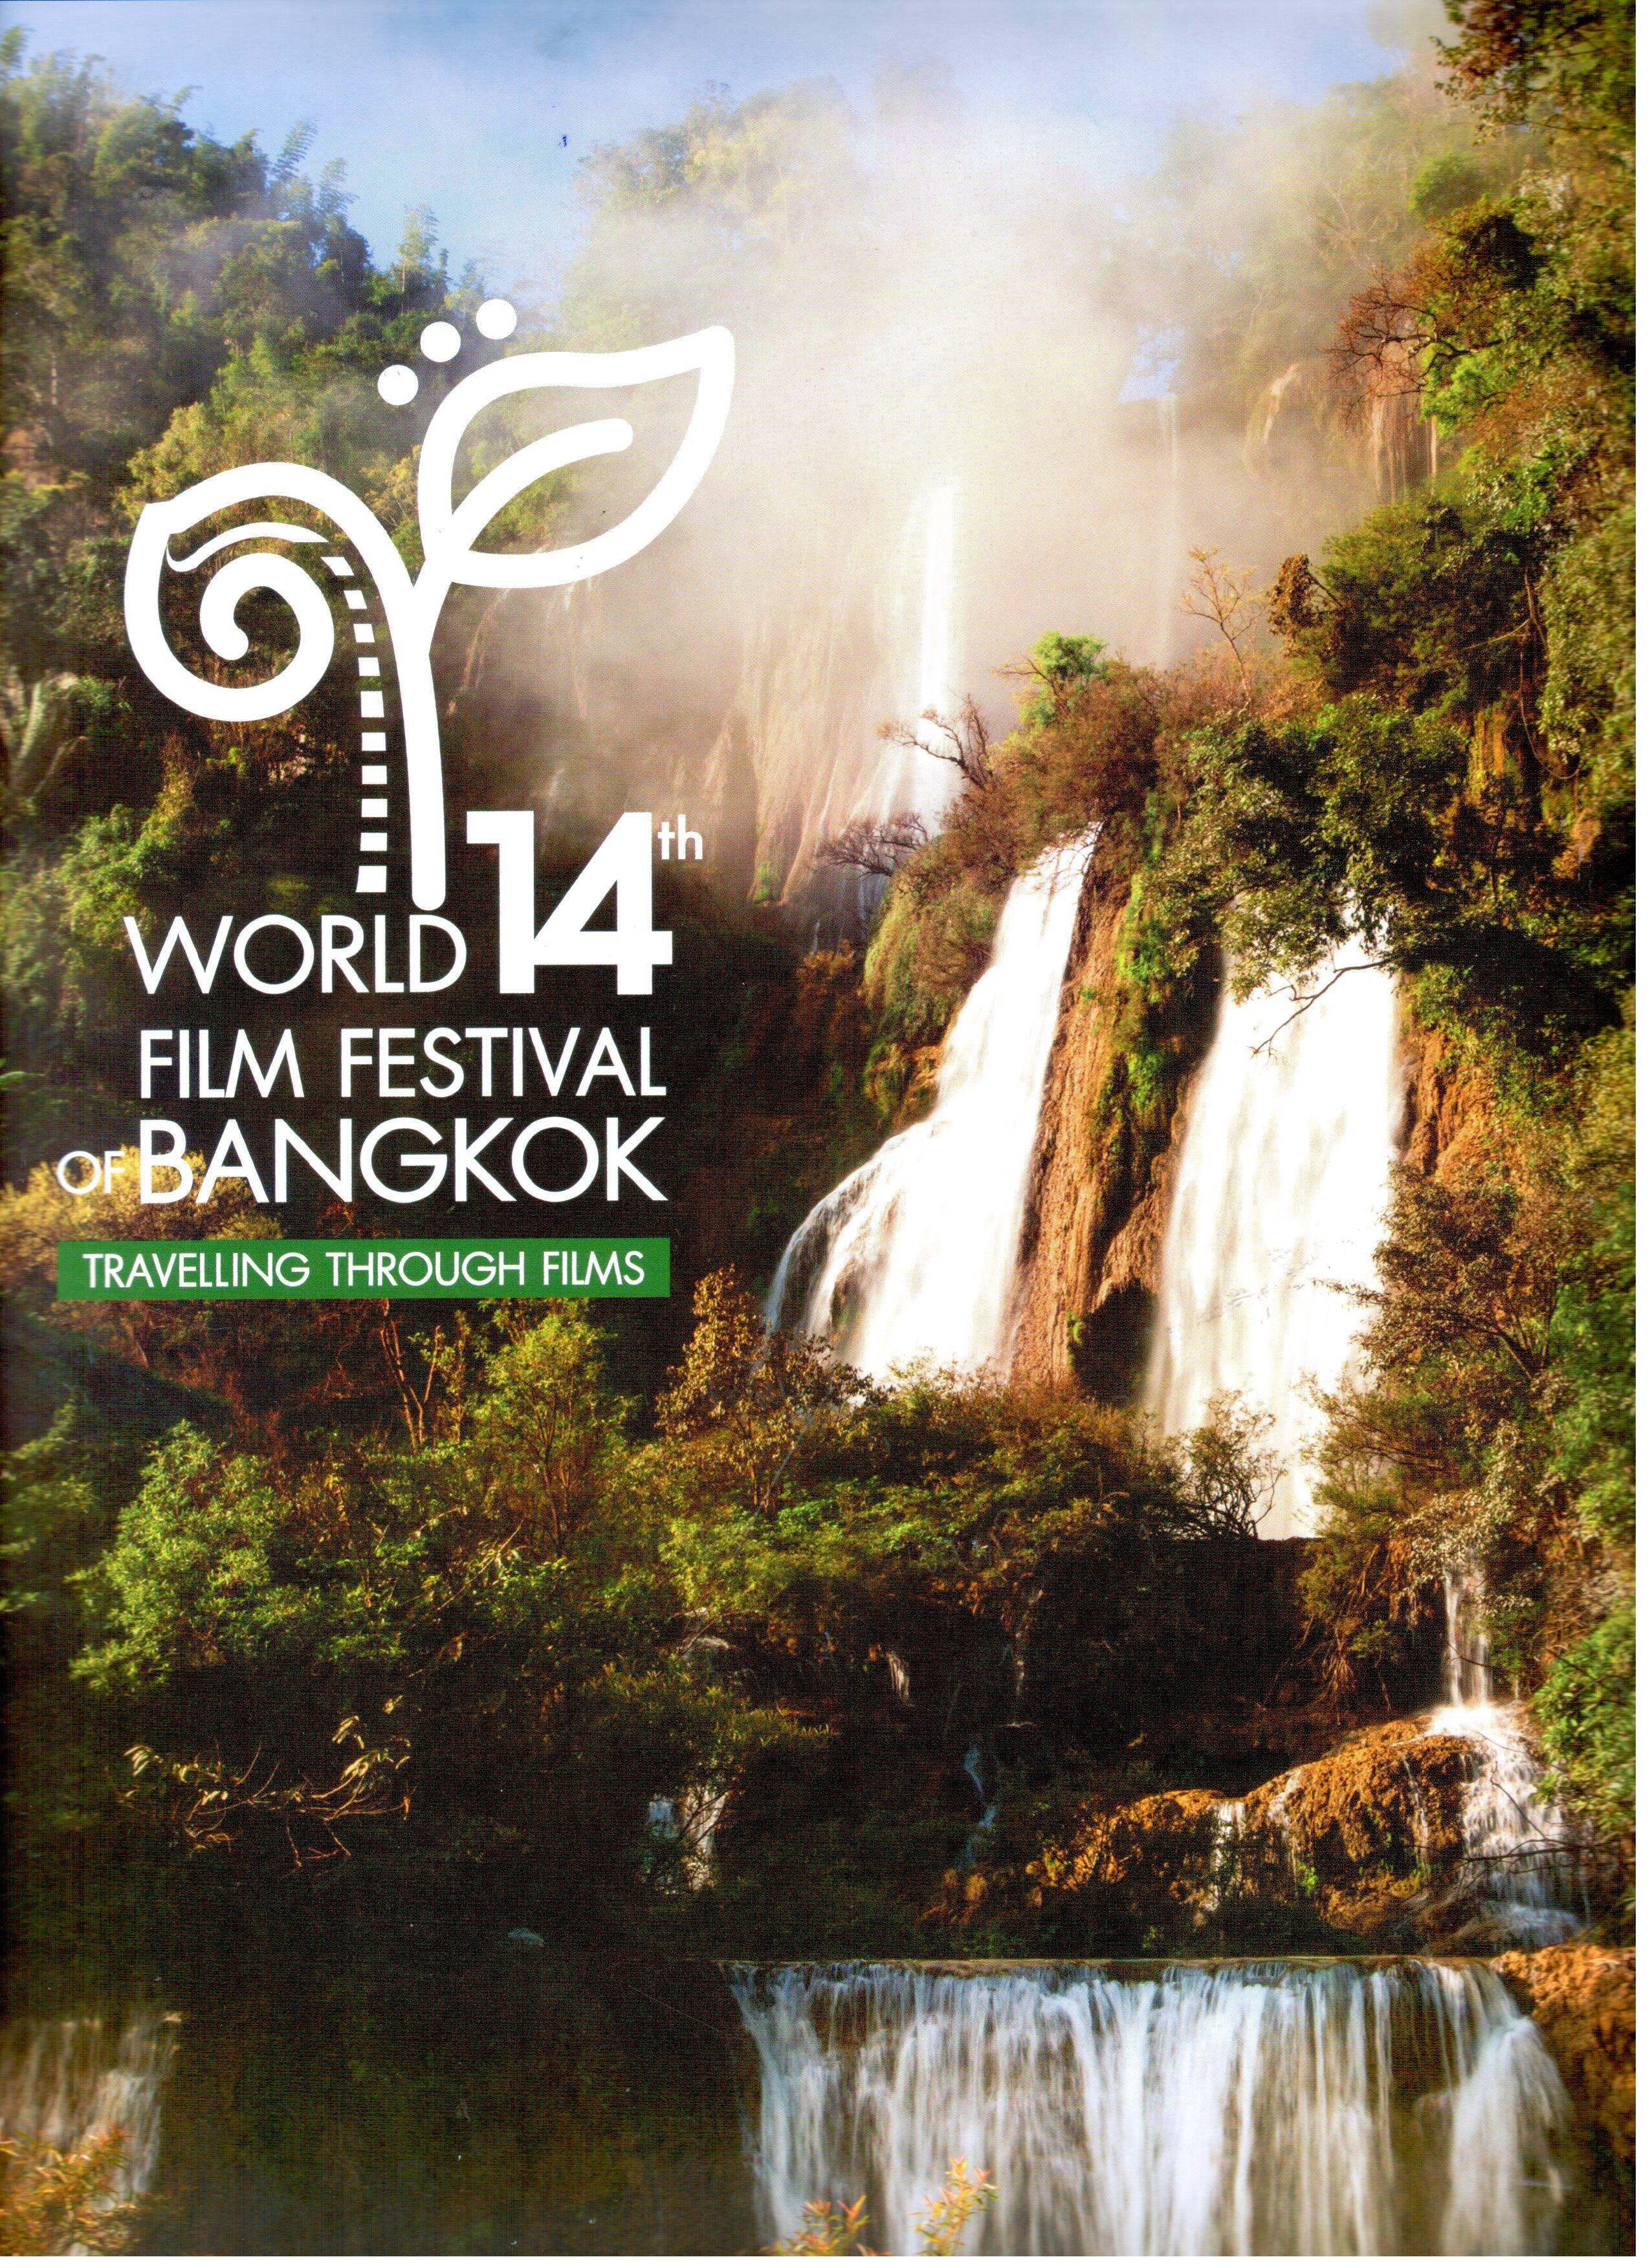 World 14th Film Festival of Bangkok: Travelling Through Films